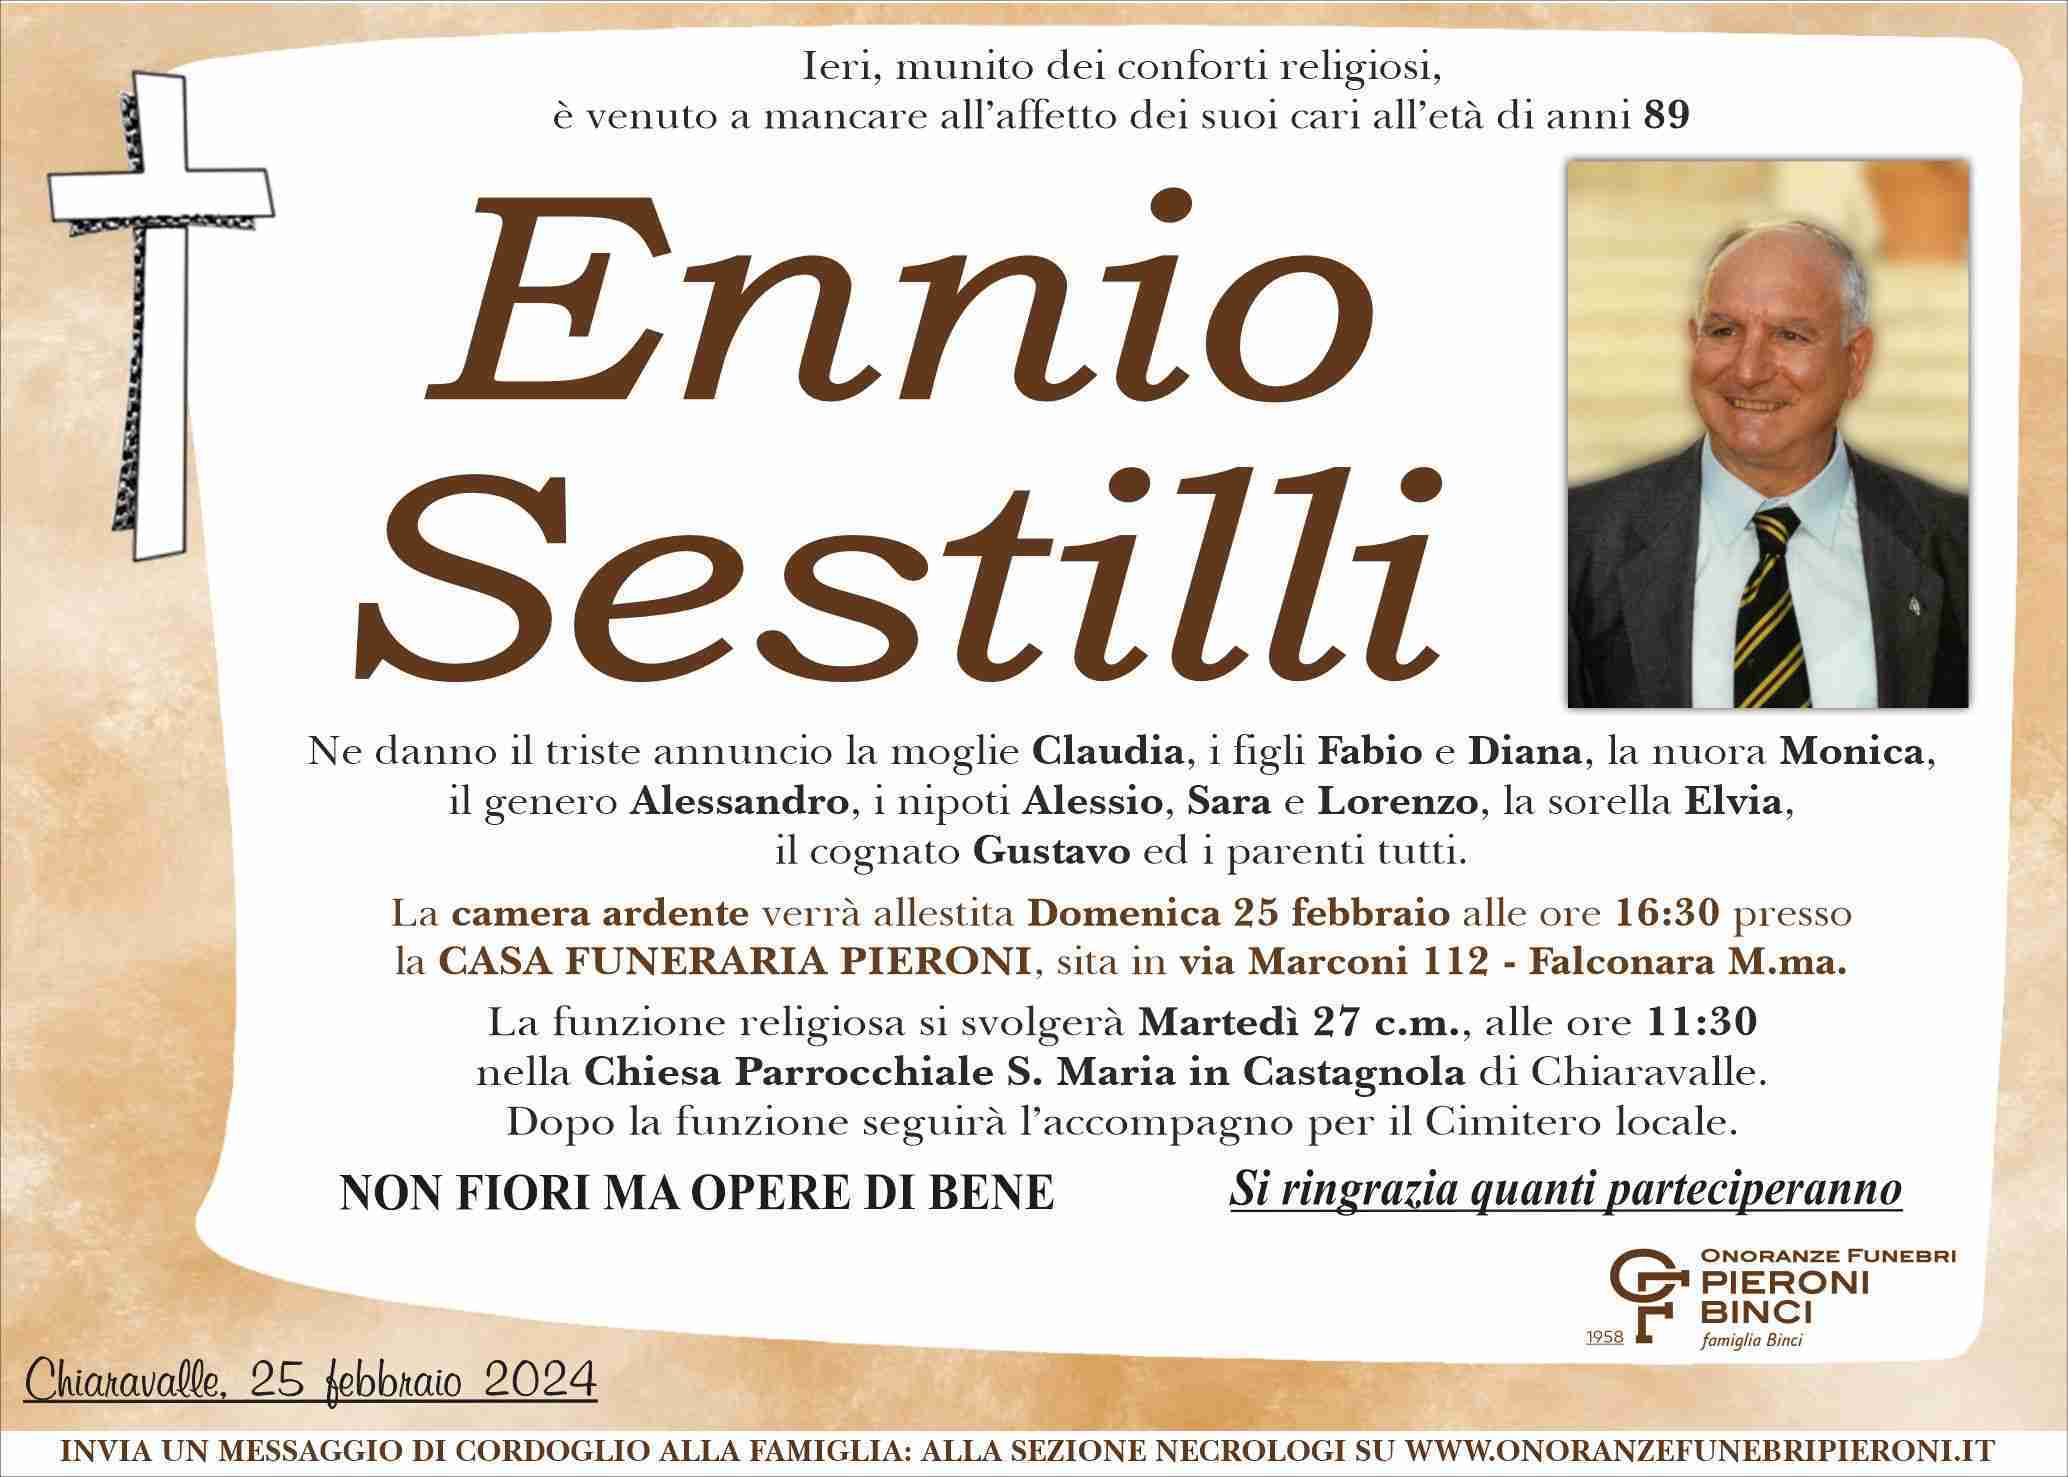 Ennio Sestilli